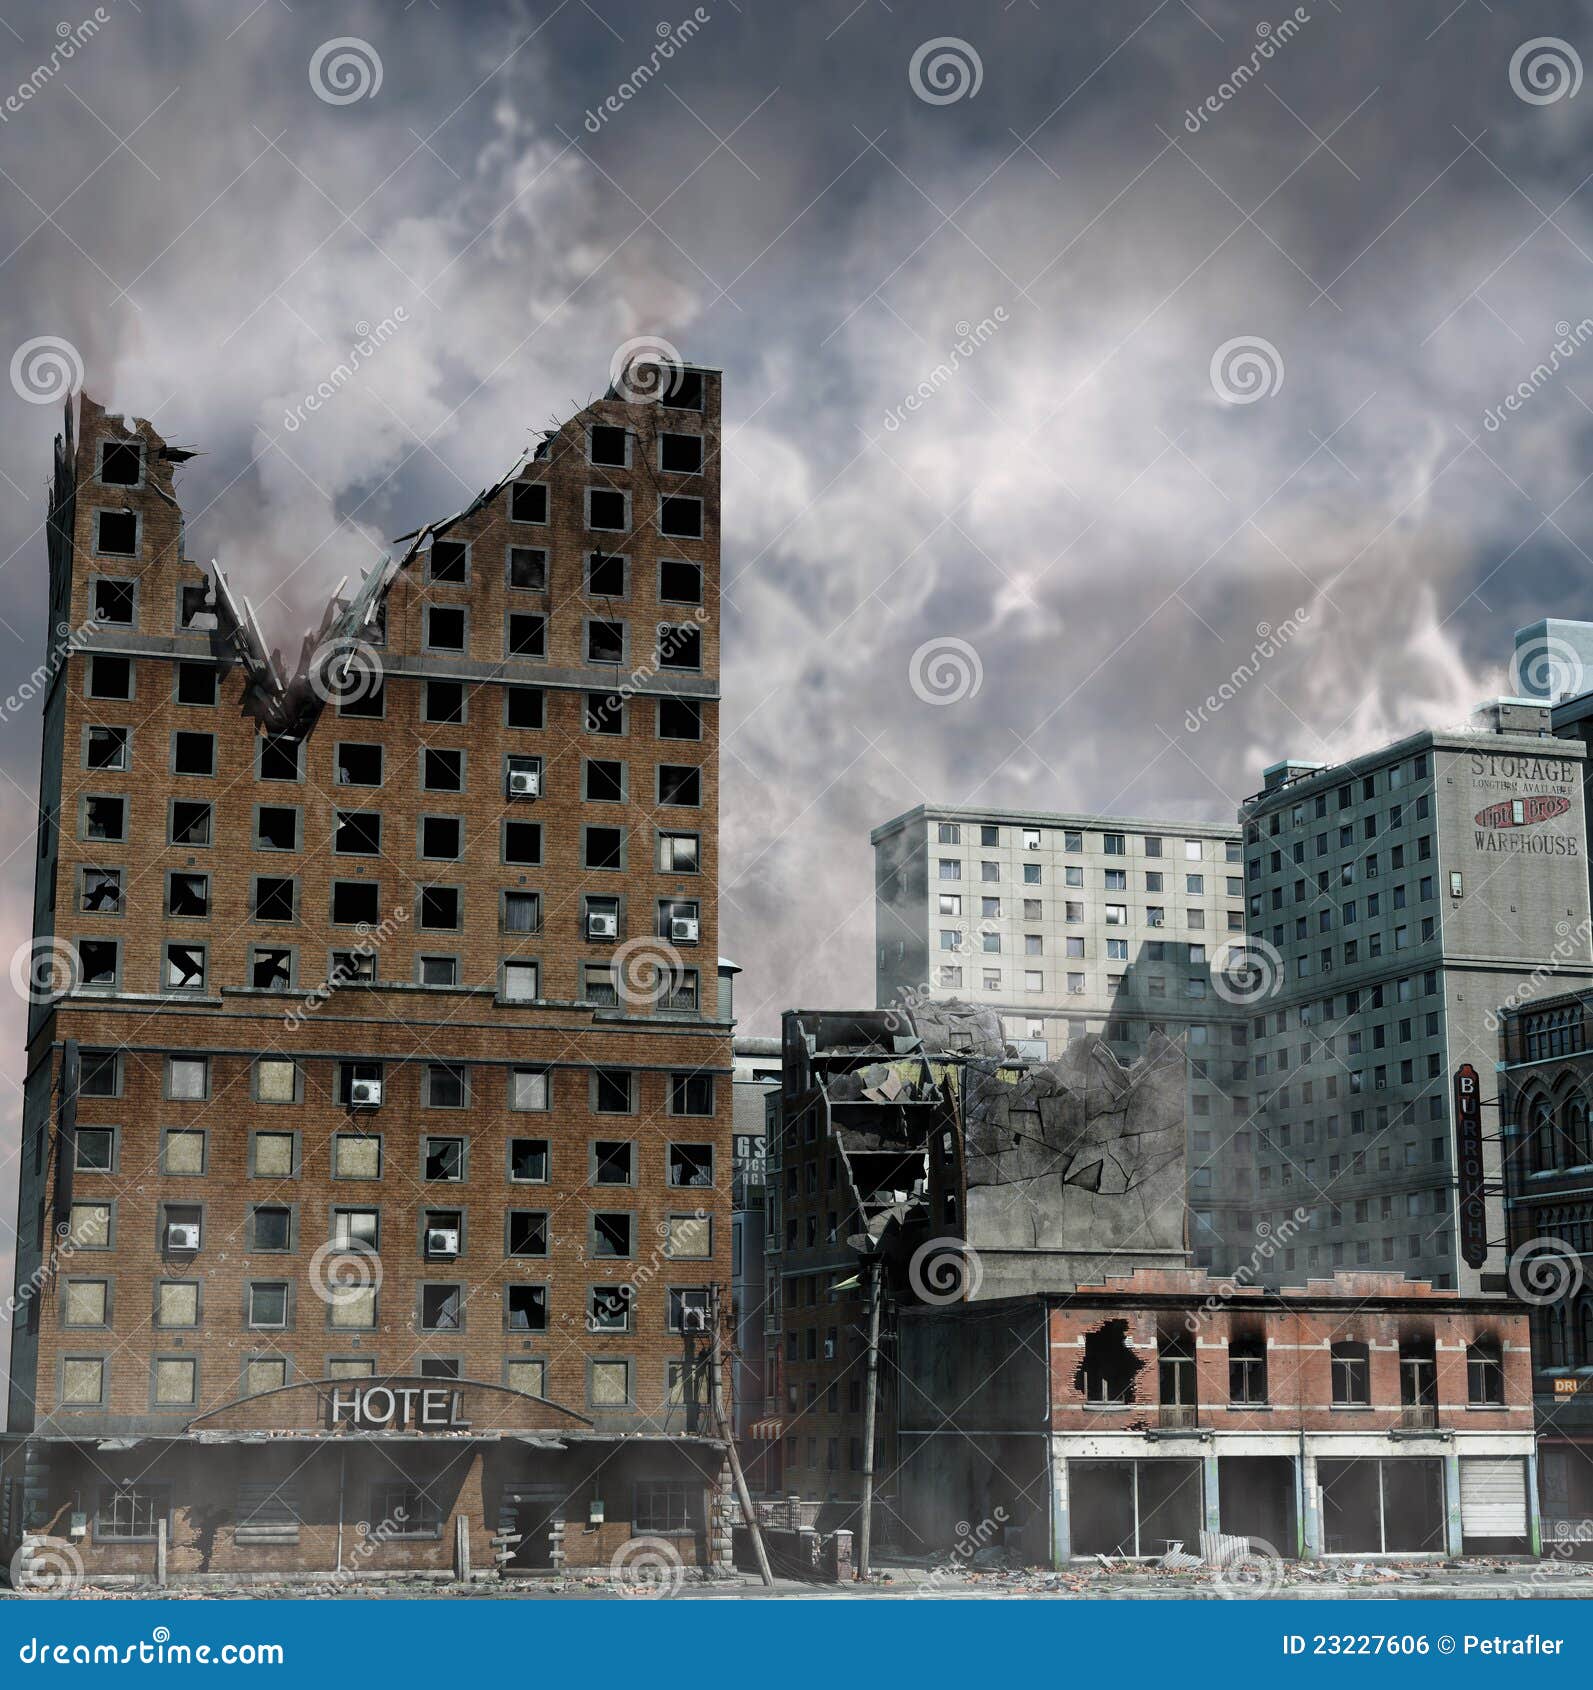 urban destruction